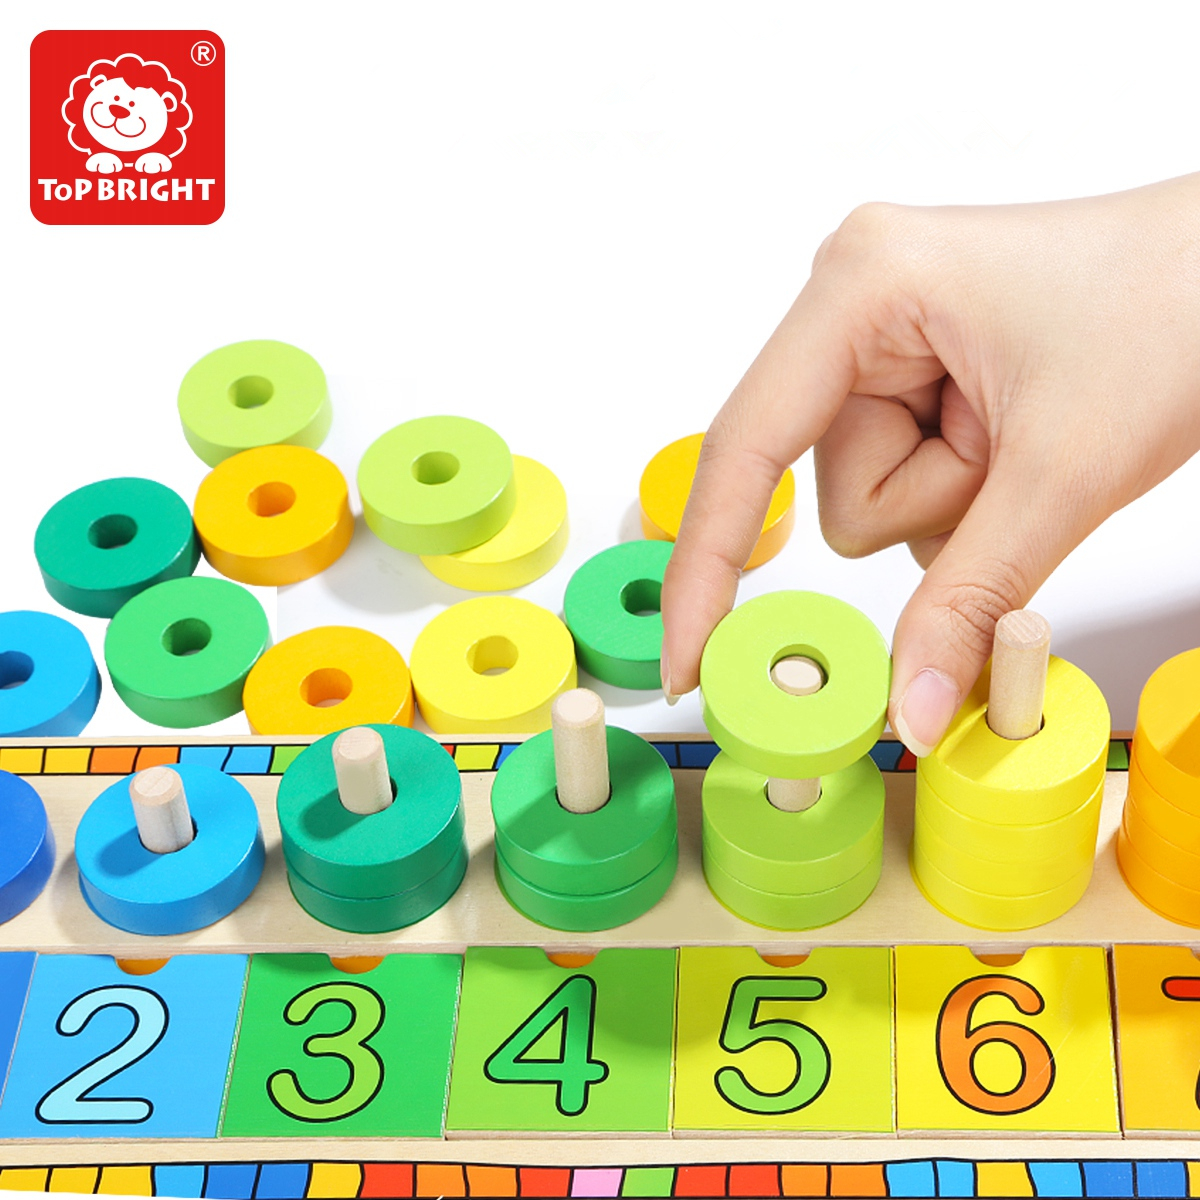 TopBright-6540-Blocks-Montessori-Classic-Math-Rainbow-Donuts-Box-Educational-Toys-for-Kids-1379243-4